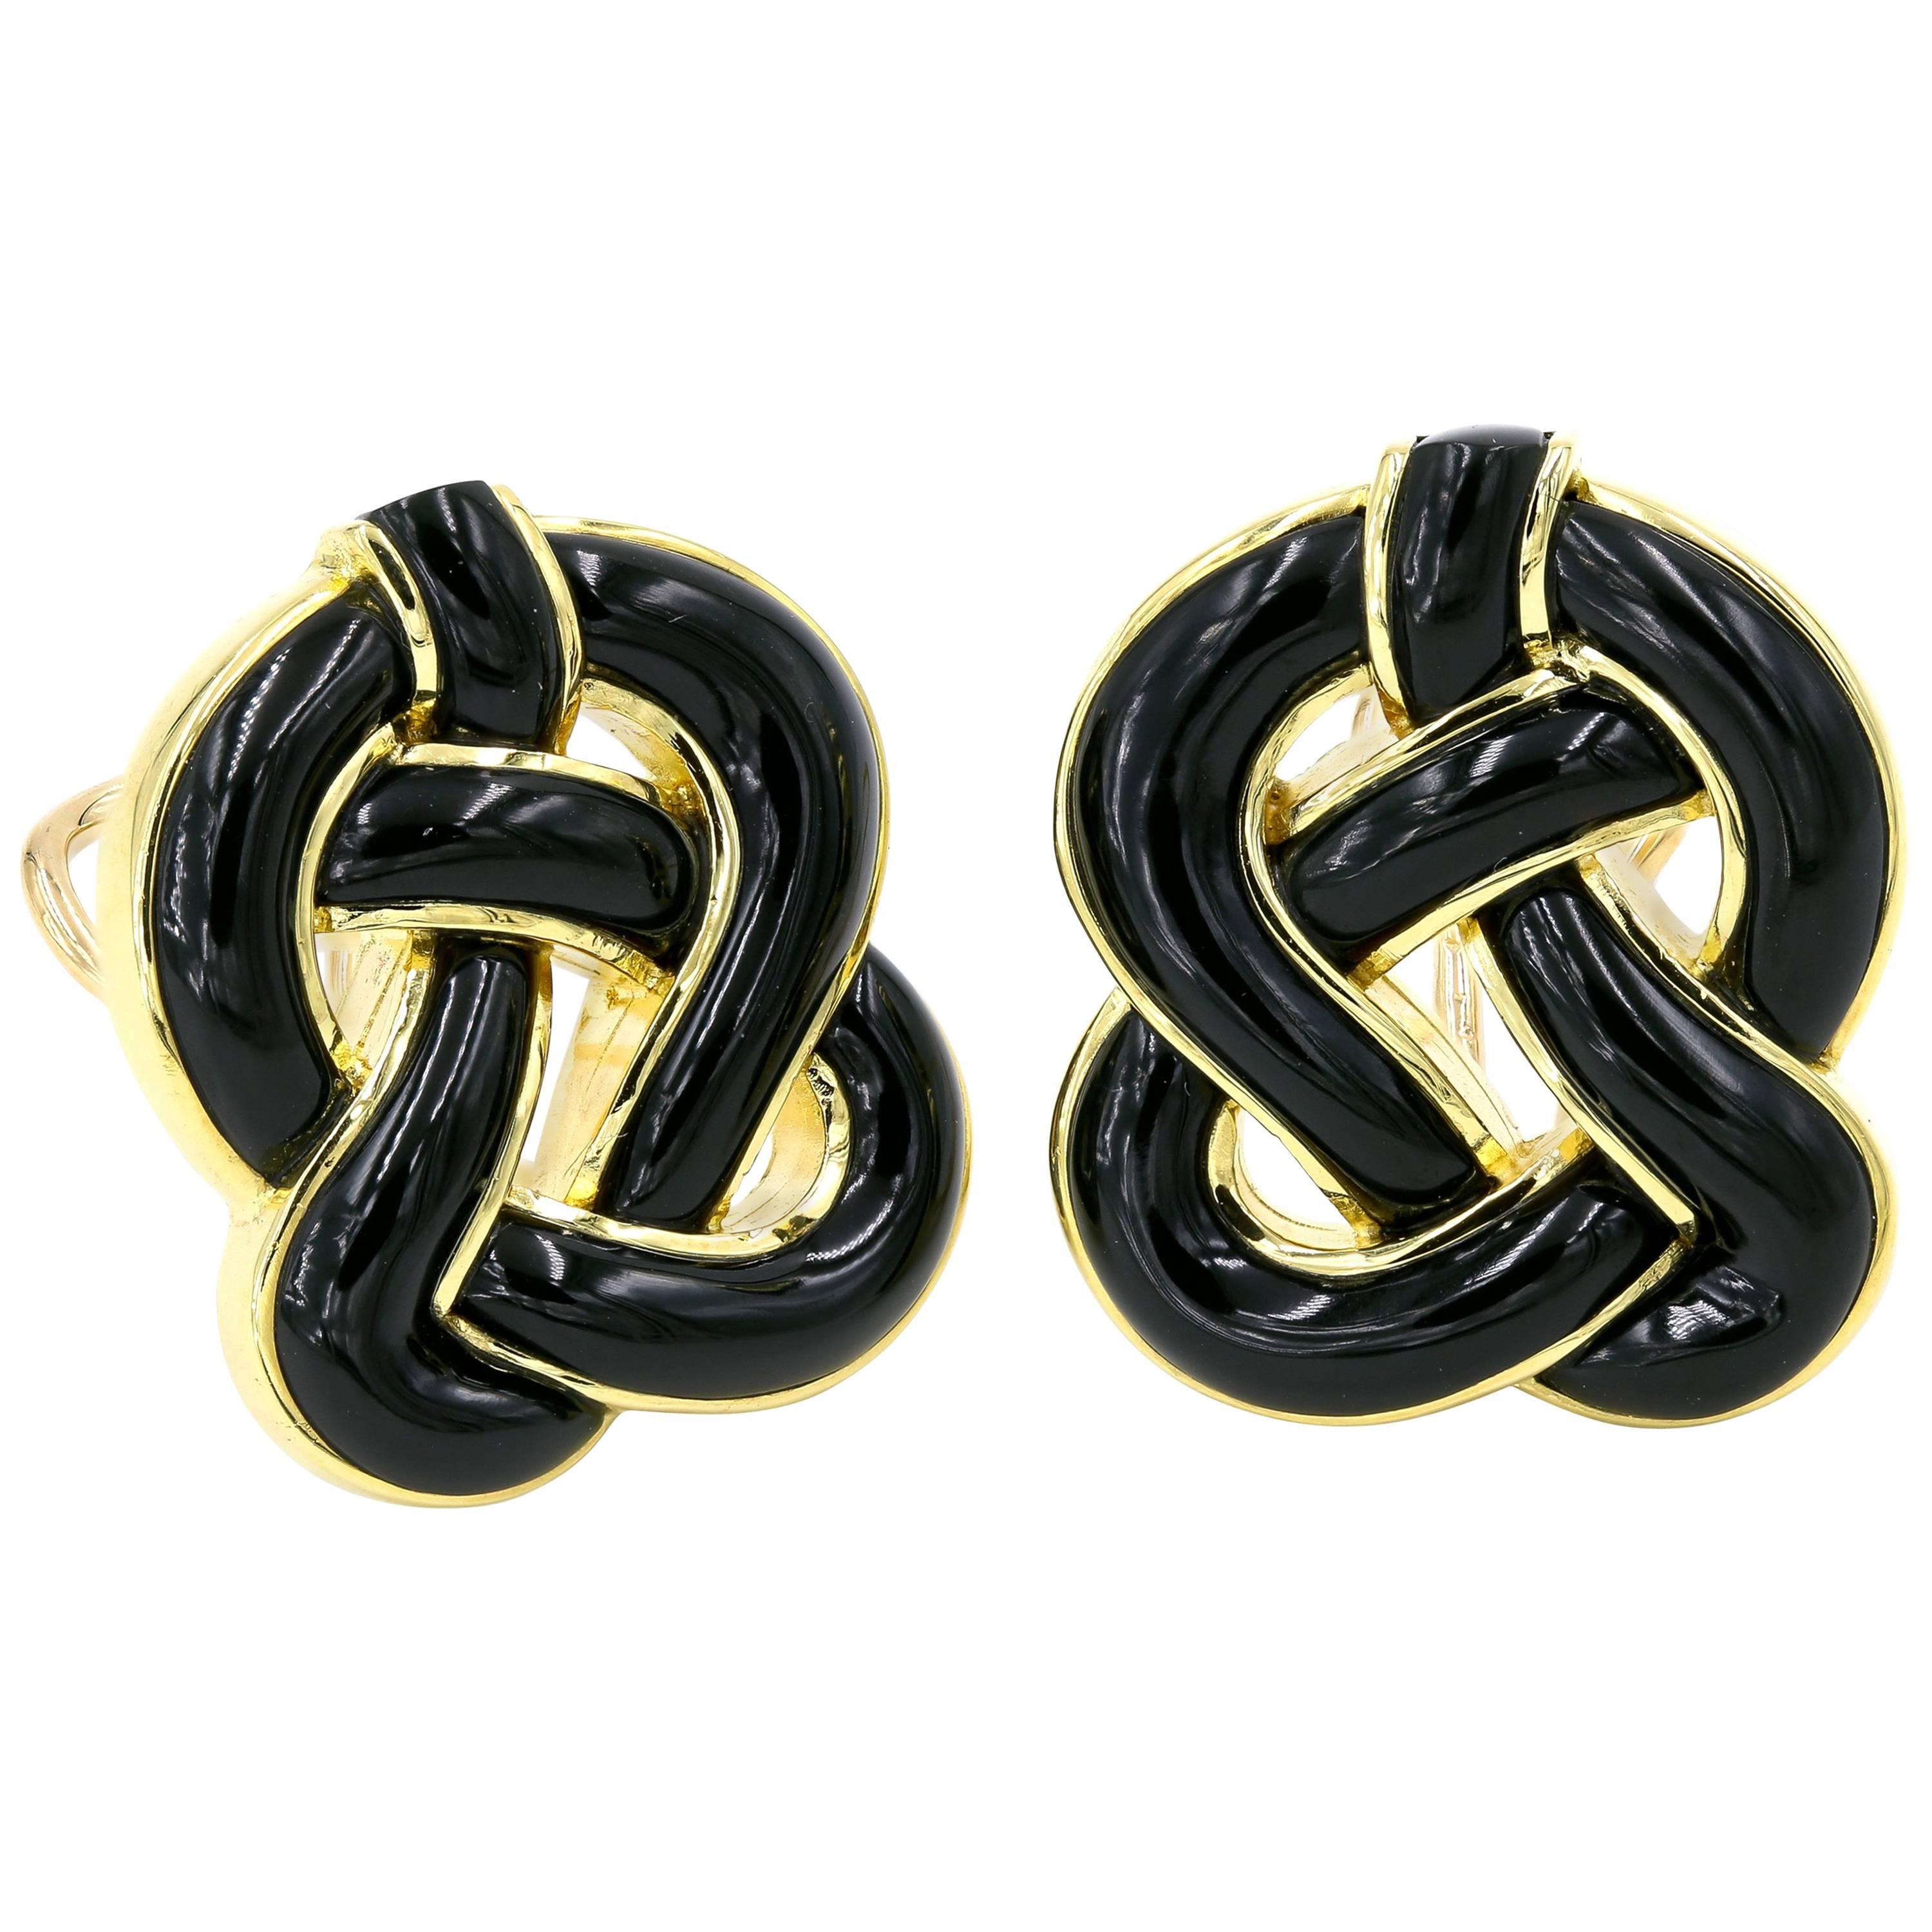 Tiffany & Co. Black Onyx and 18 Karat Yellow Gold Earrings